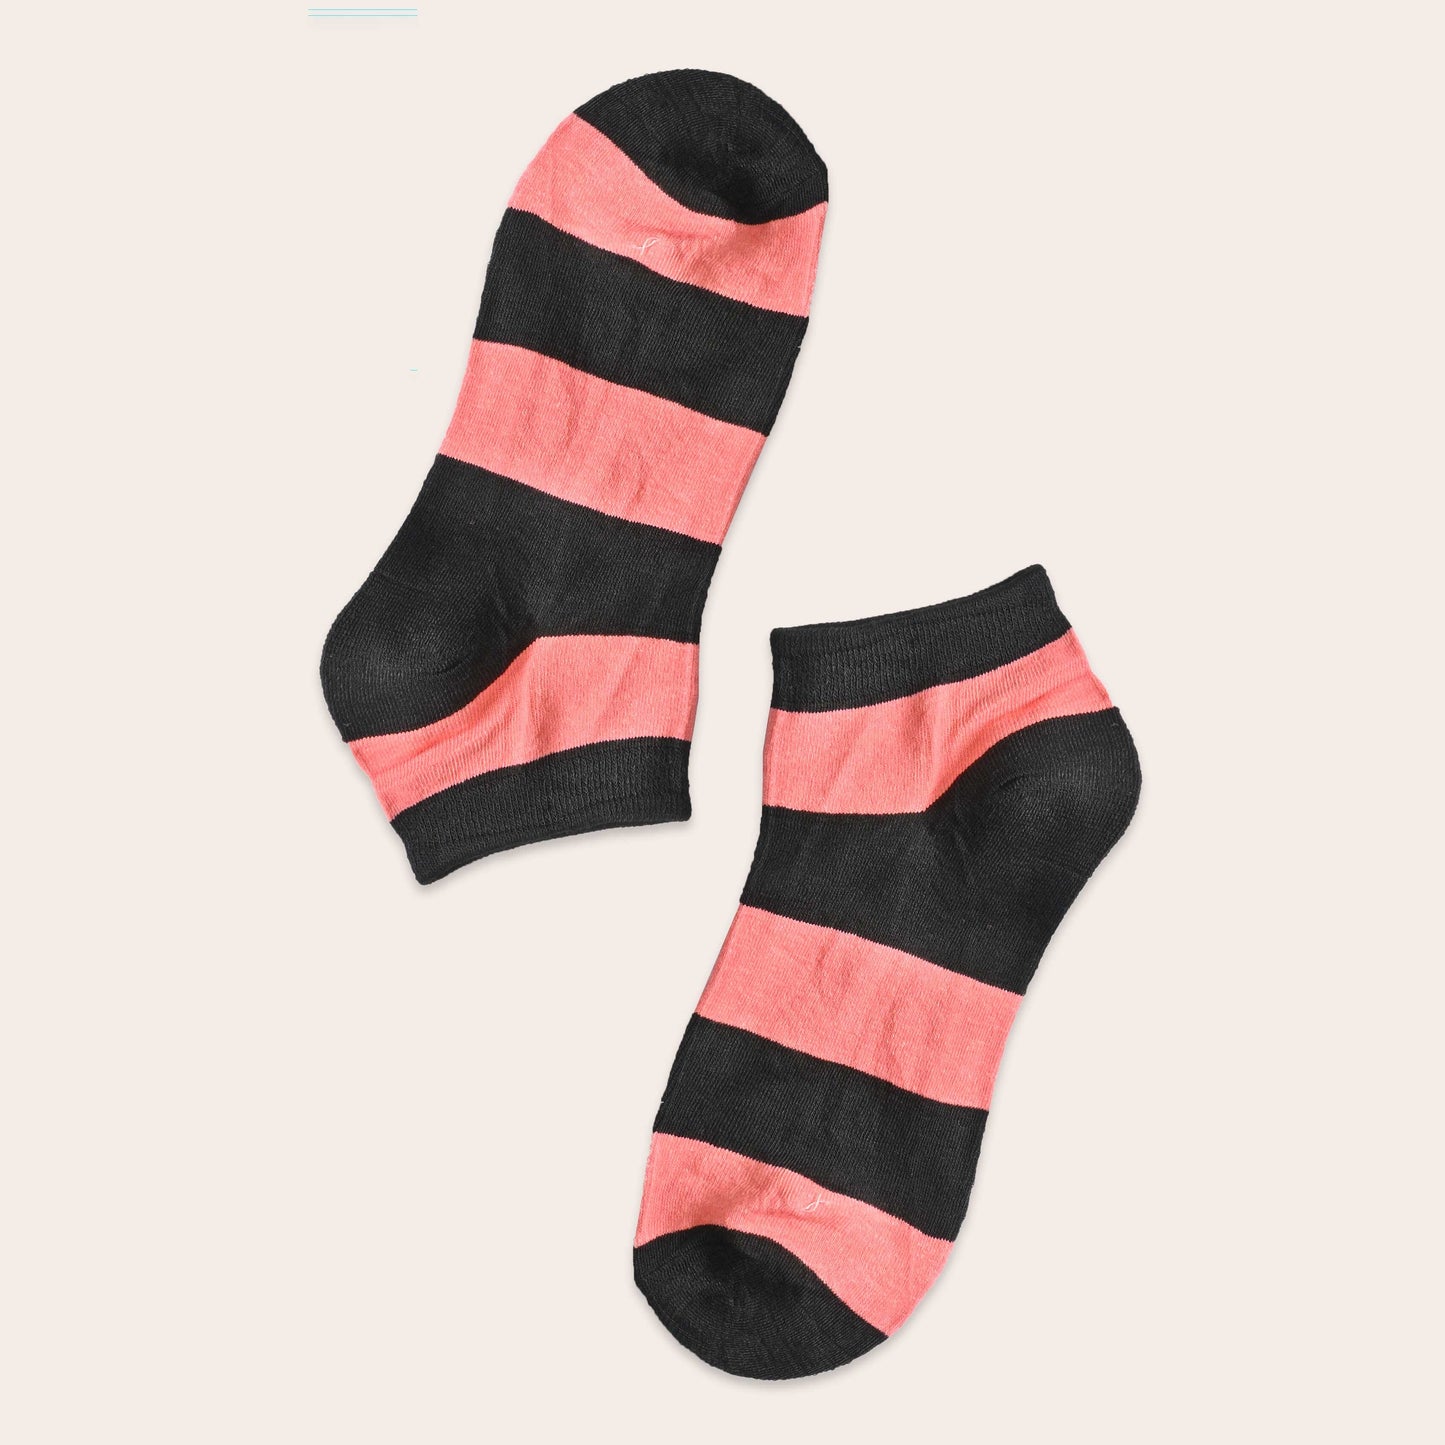 Tlia Men's Fashion Anklet Socks Socks SRL EUR 38-43 Tea Pink D2